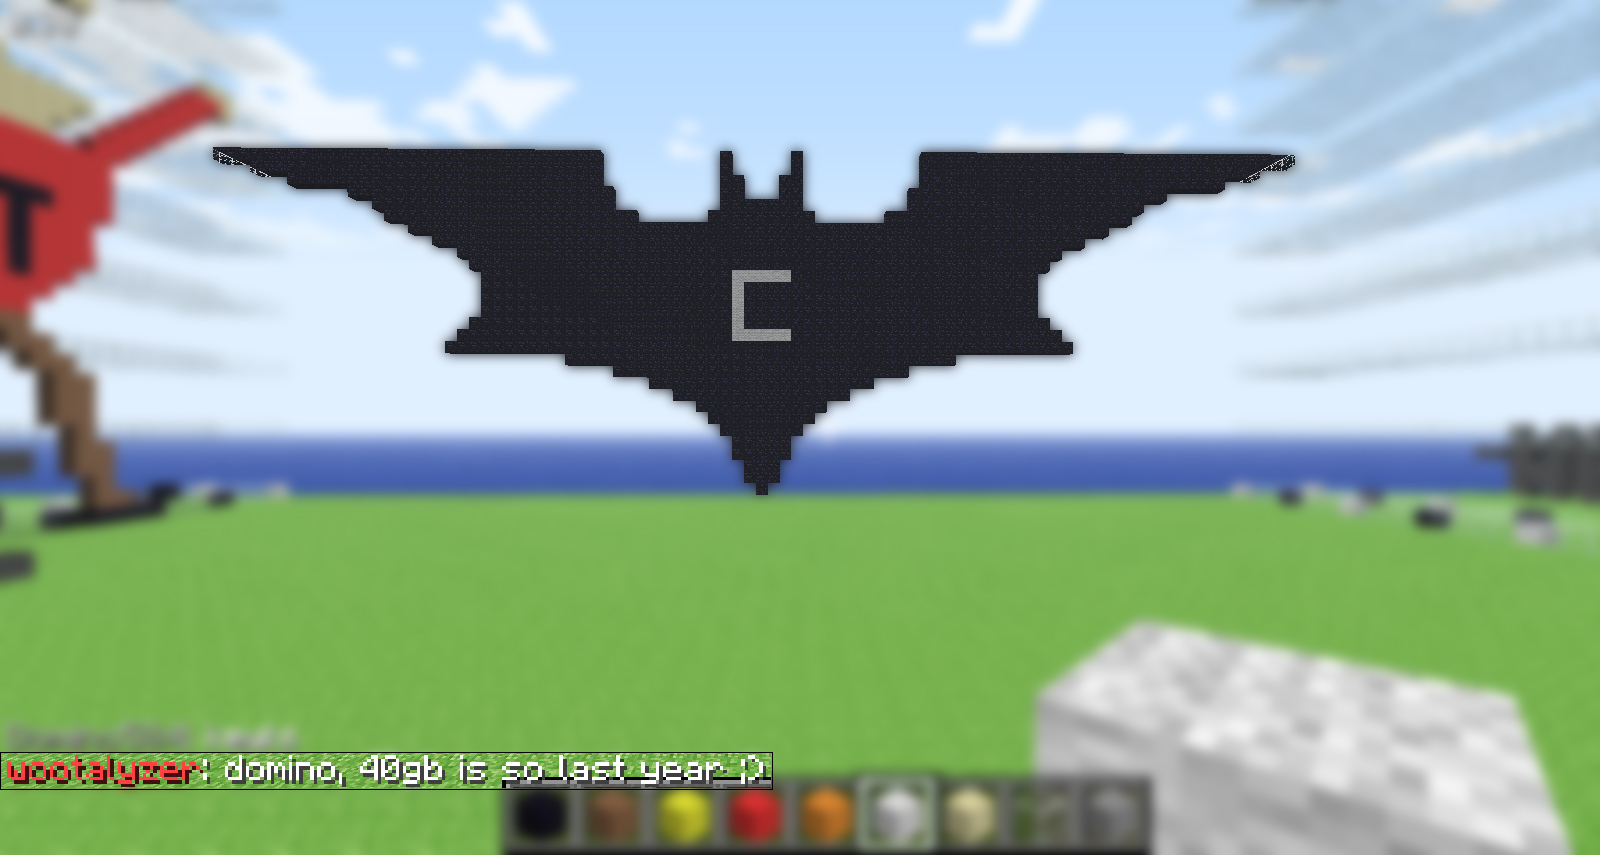 BatmanSymbol.jpg